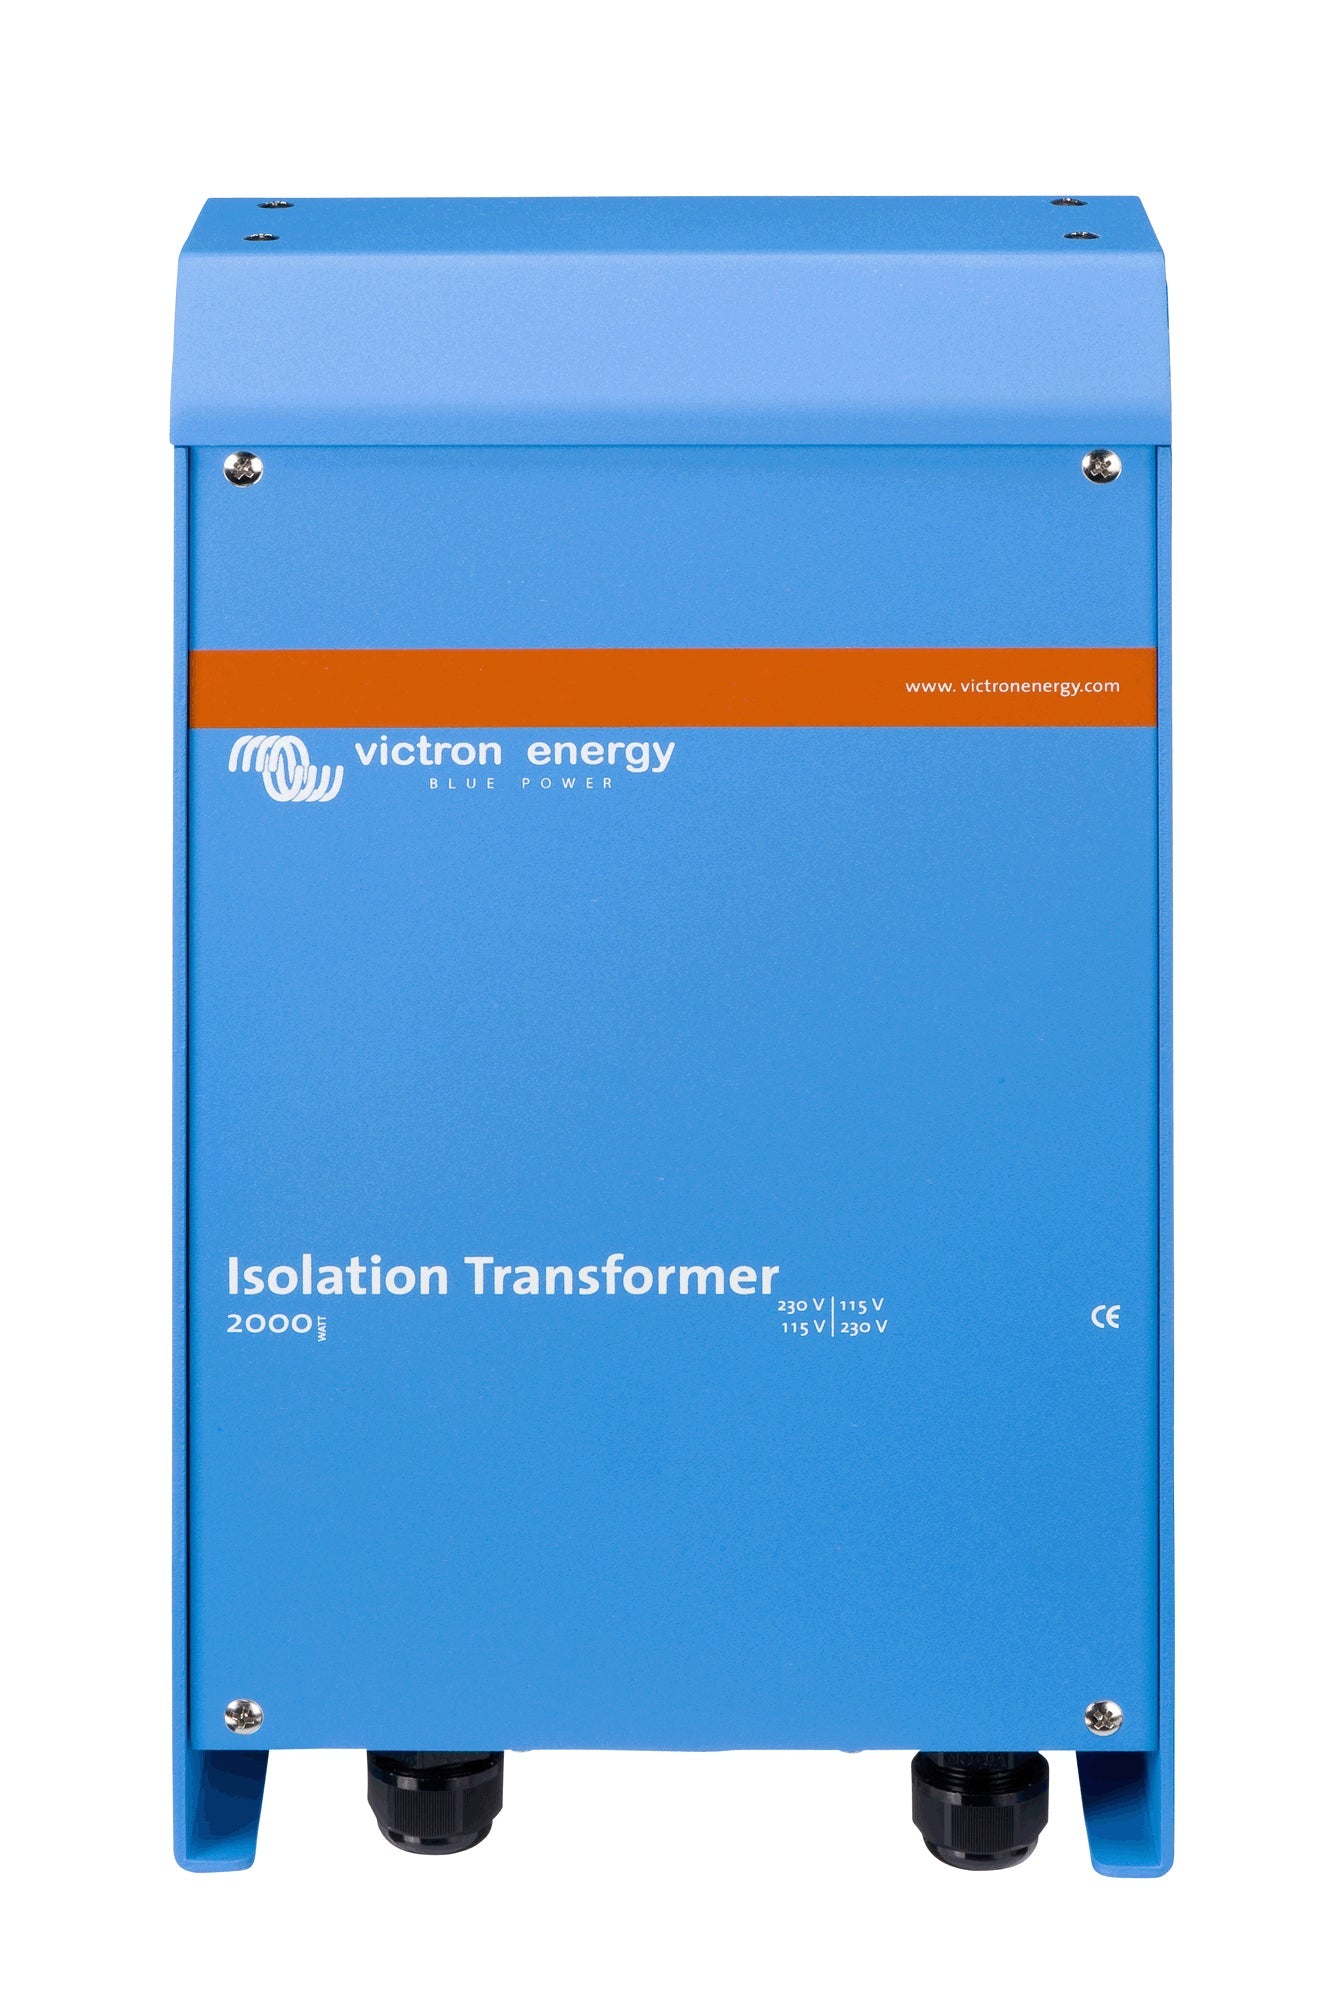 Victron Energy ITR040362041 Isolation Transformer 3600W 115/230V